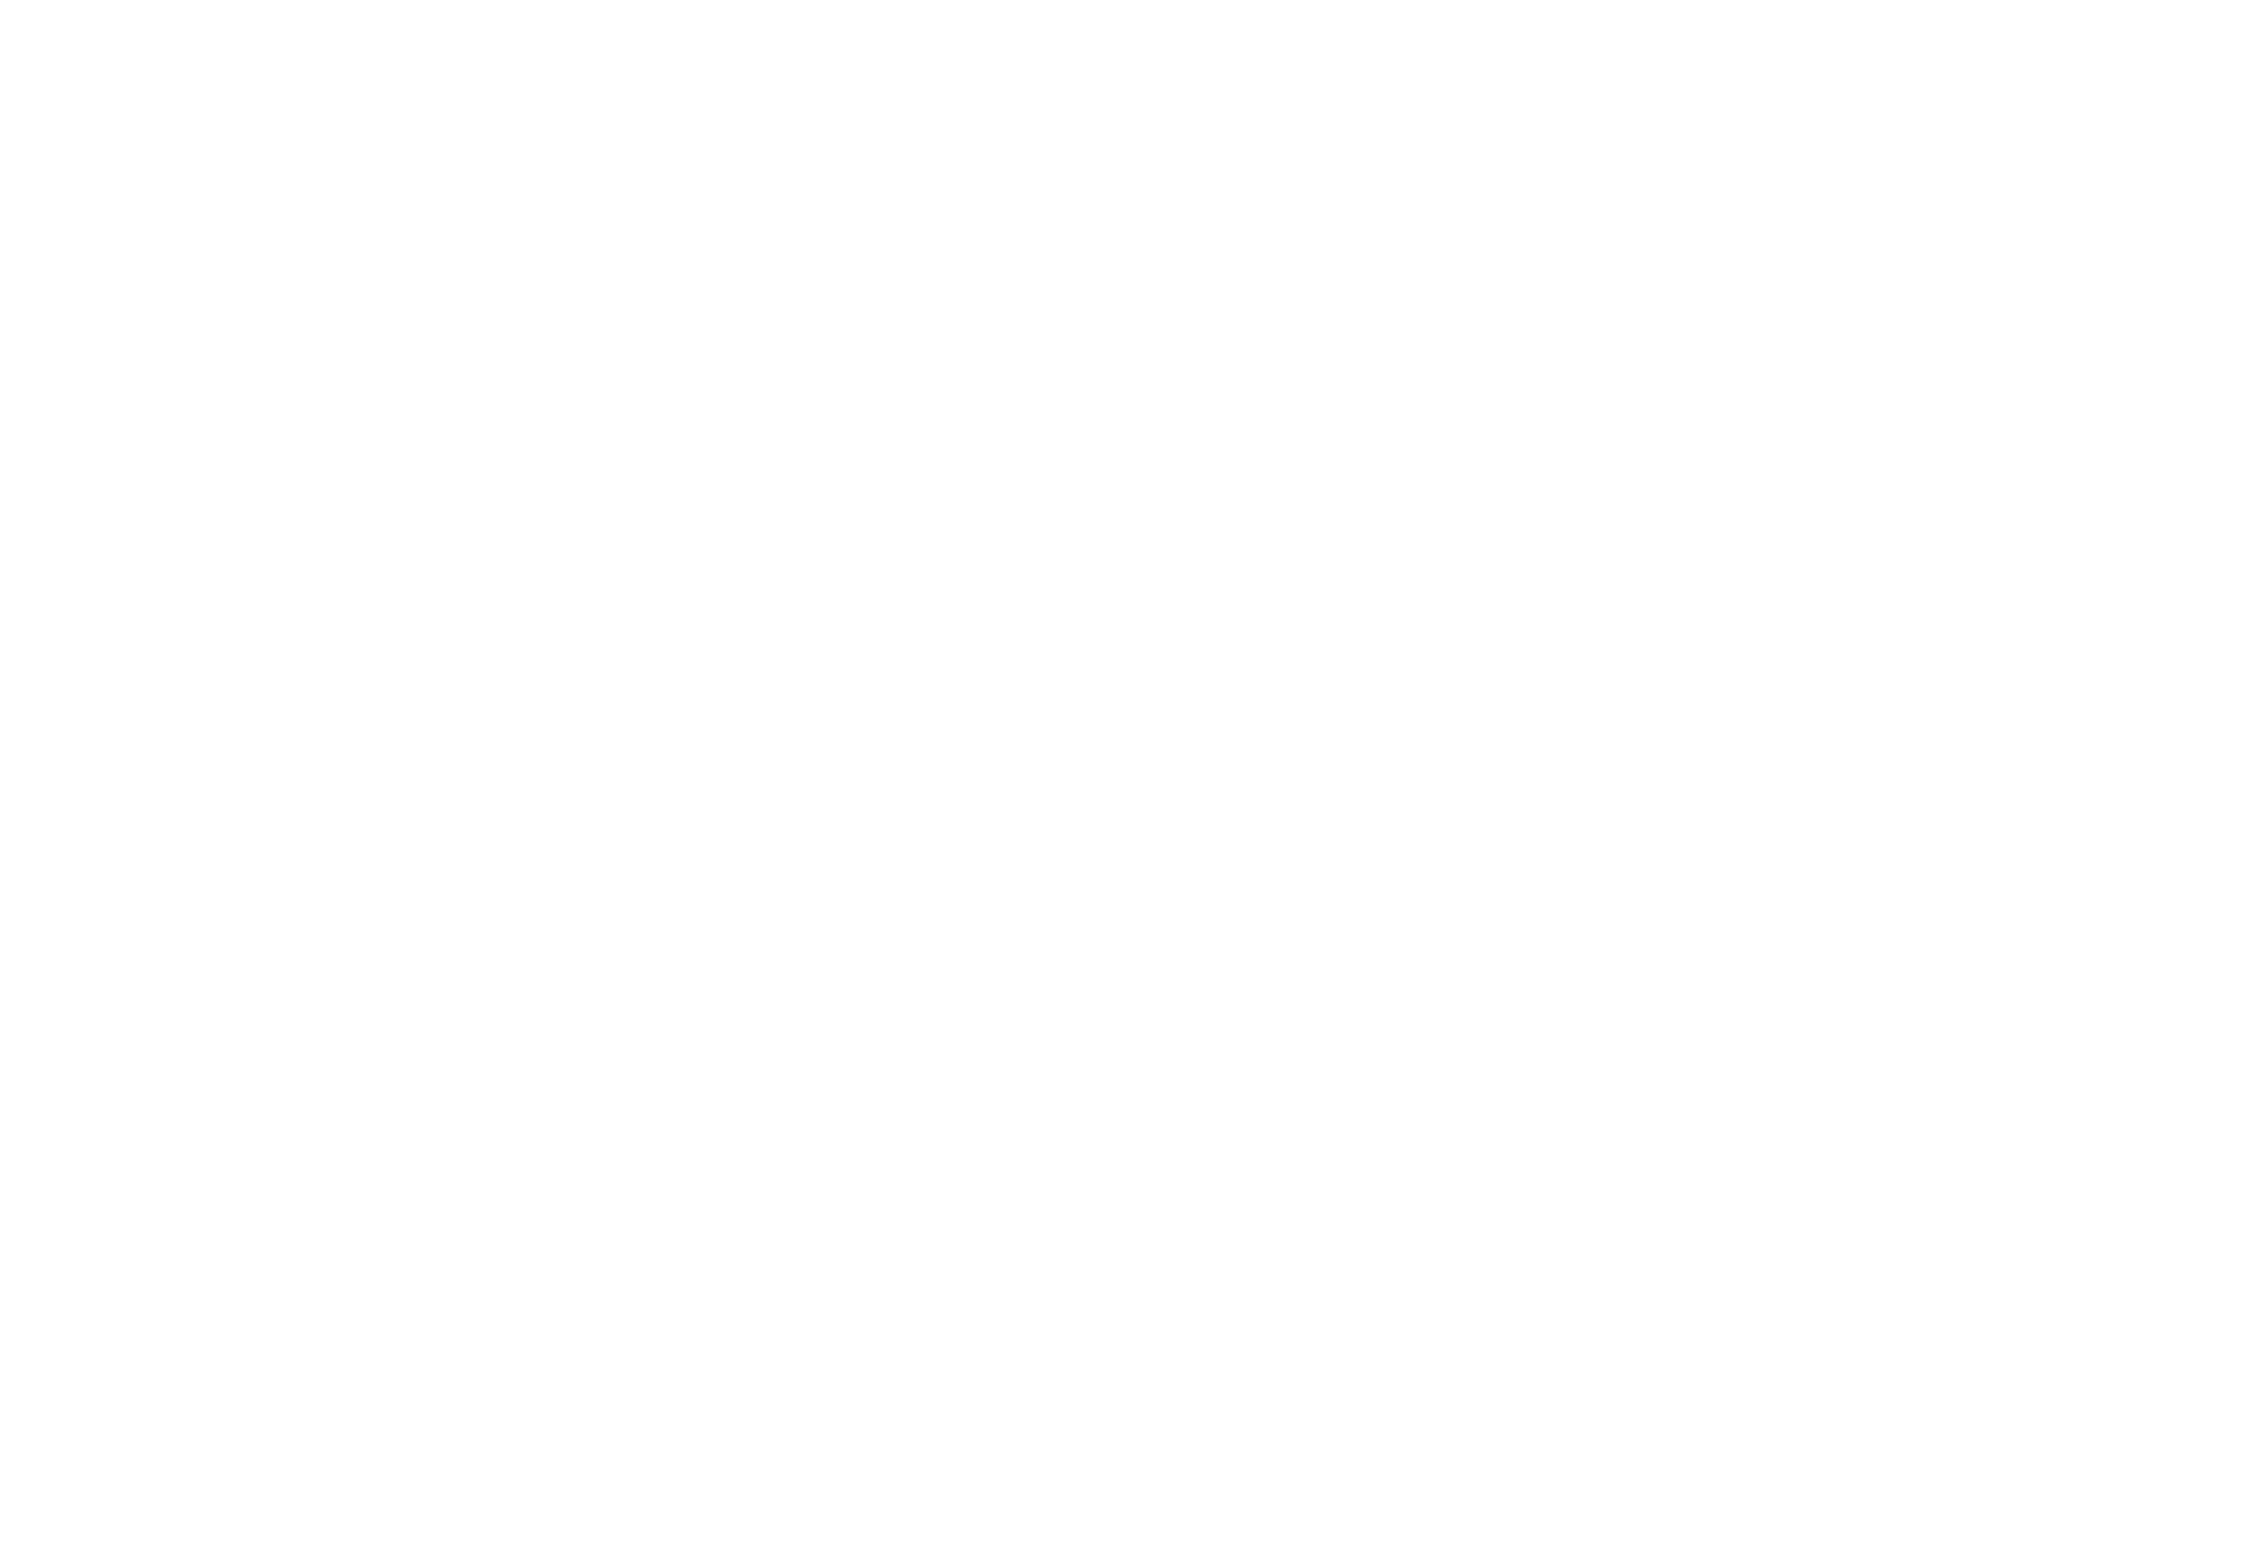 The Whittier